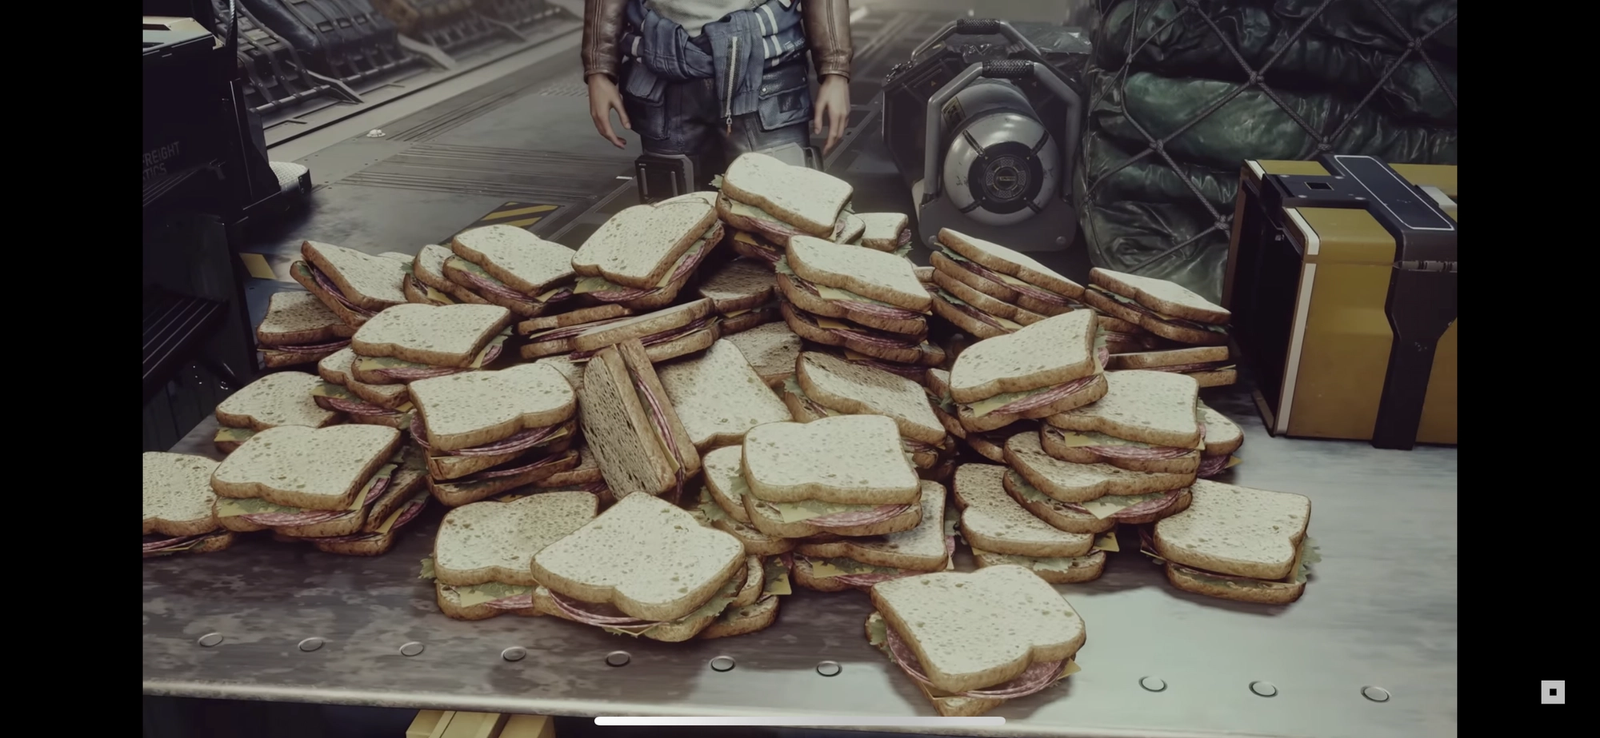 A pile of salami sandwiches